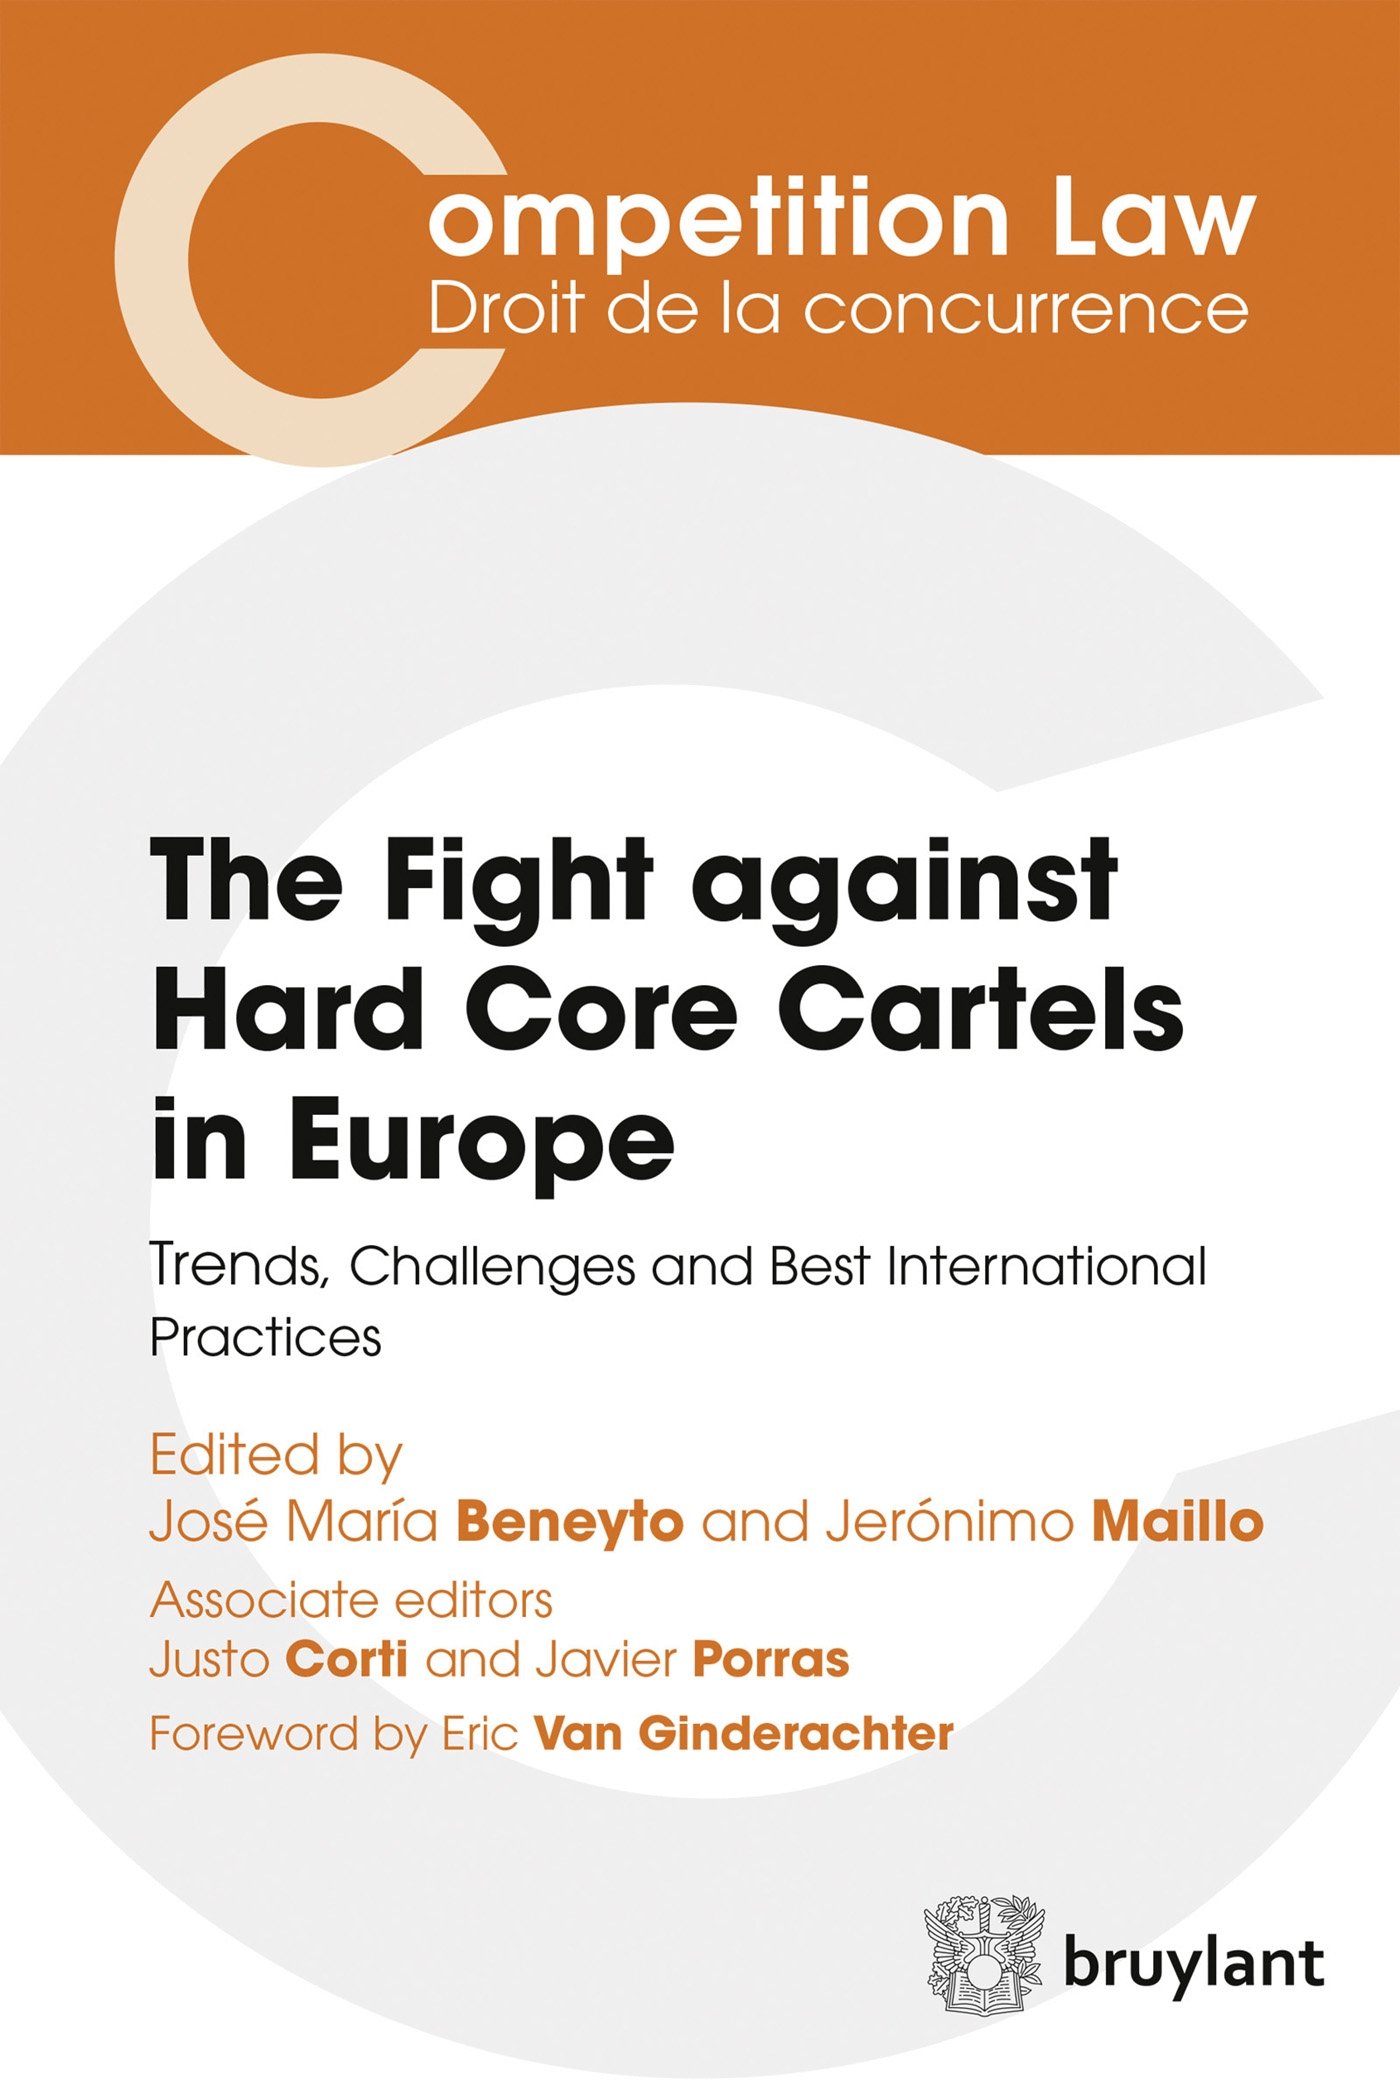 Imagen de portada del libro The fight against hard core cartels in Europe